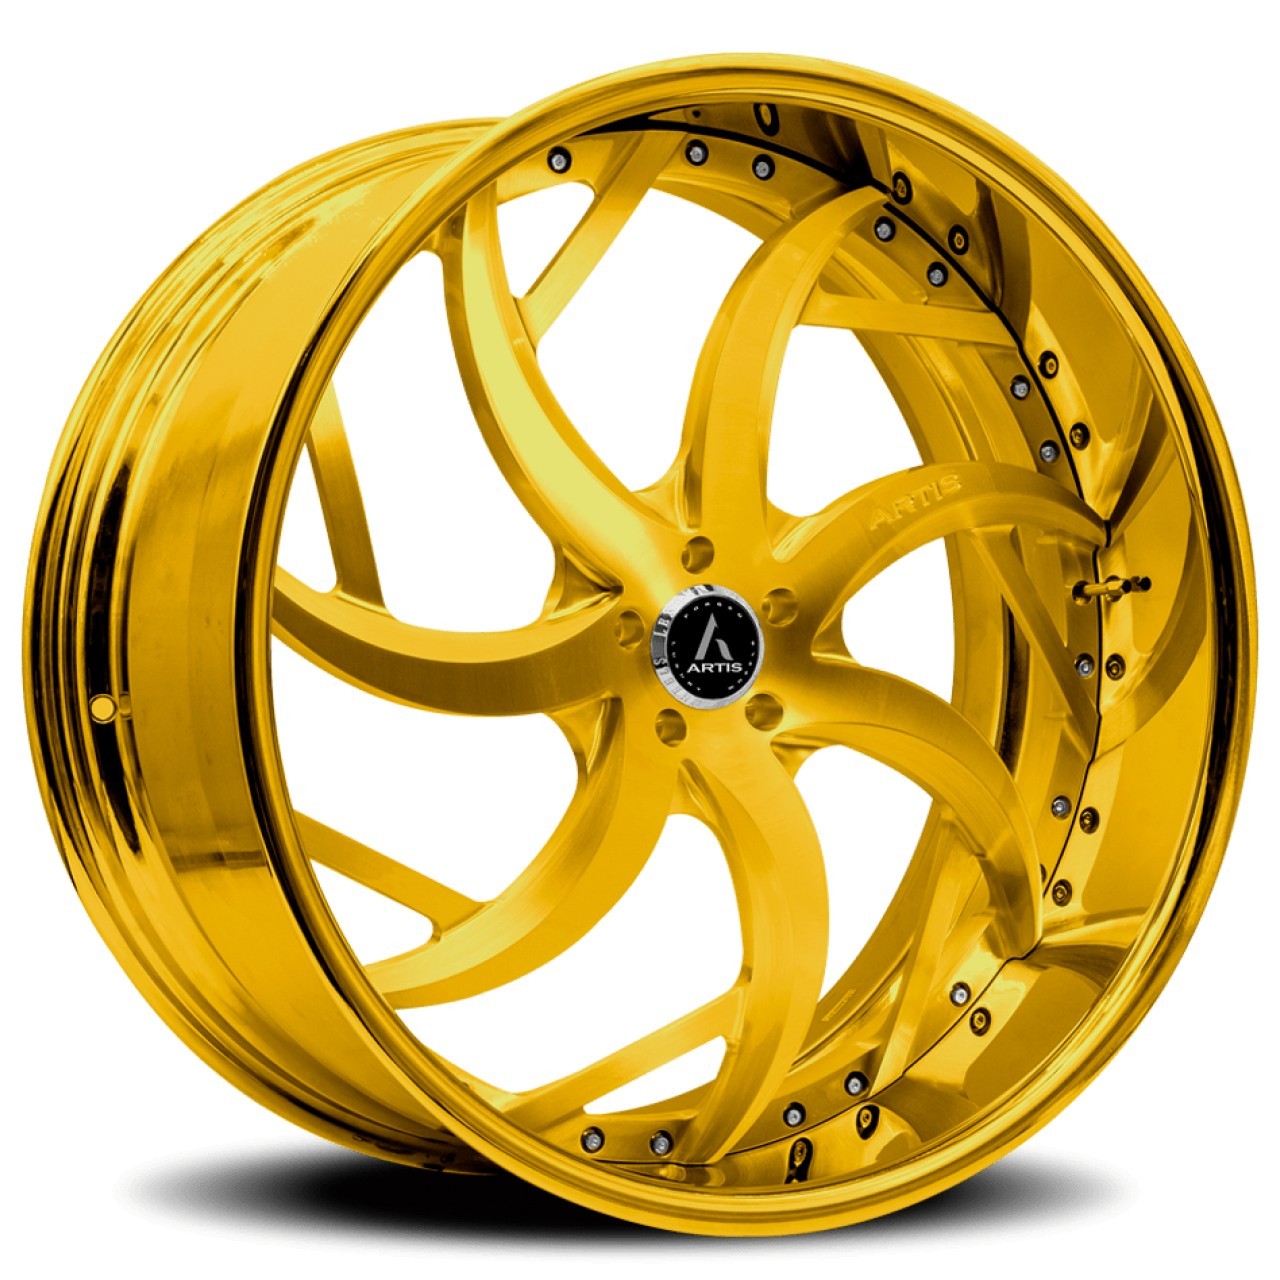 Artis SinCity forged wheels